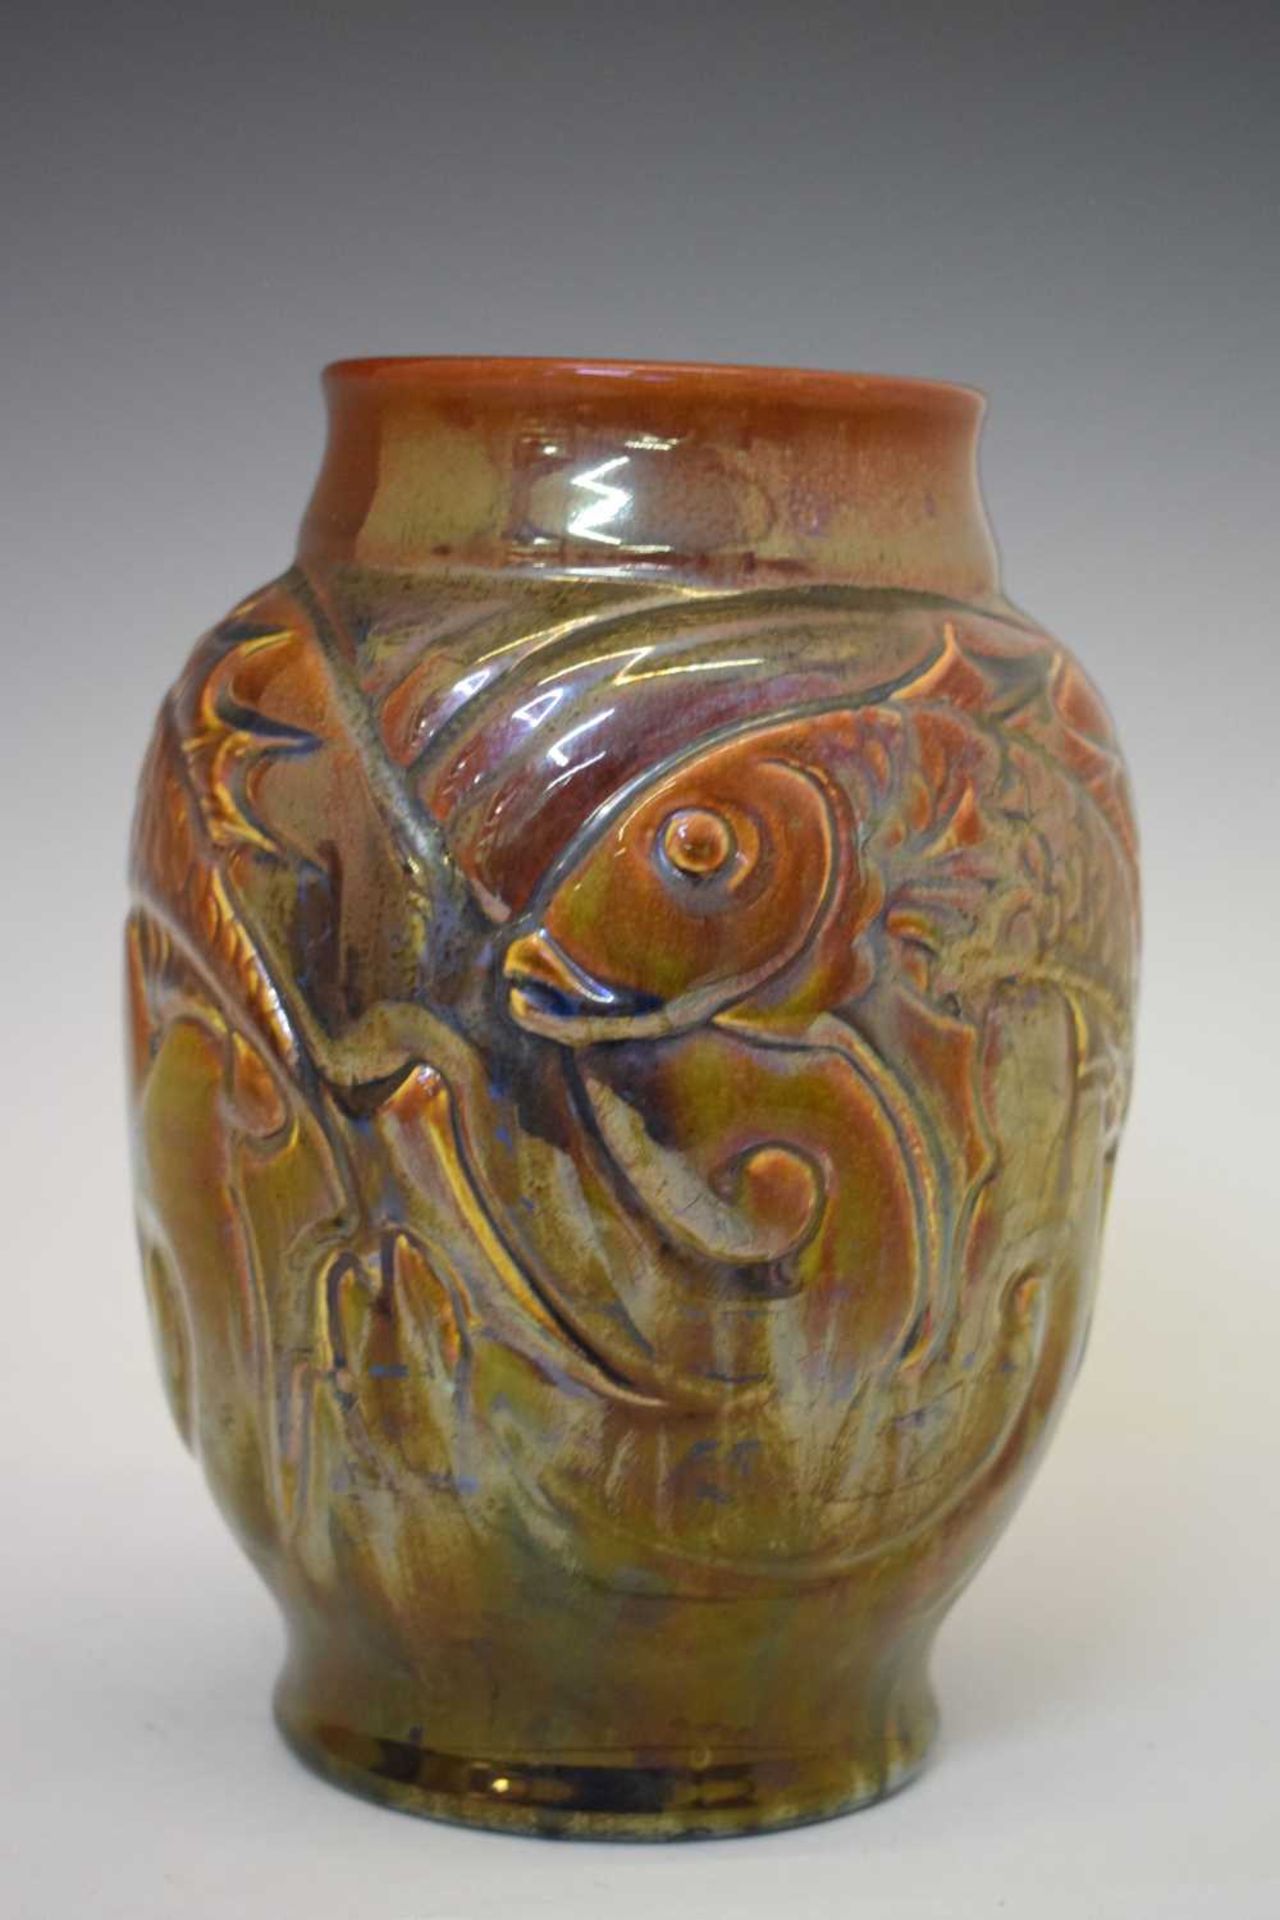 Richard Joyce - Pilkington's Royal Lancastrian - Fish vase - Image 3 of 9